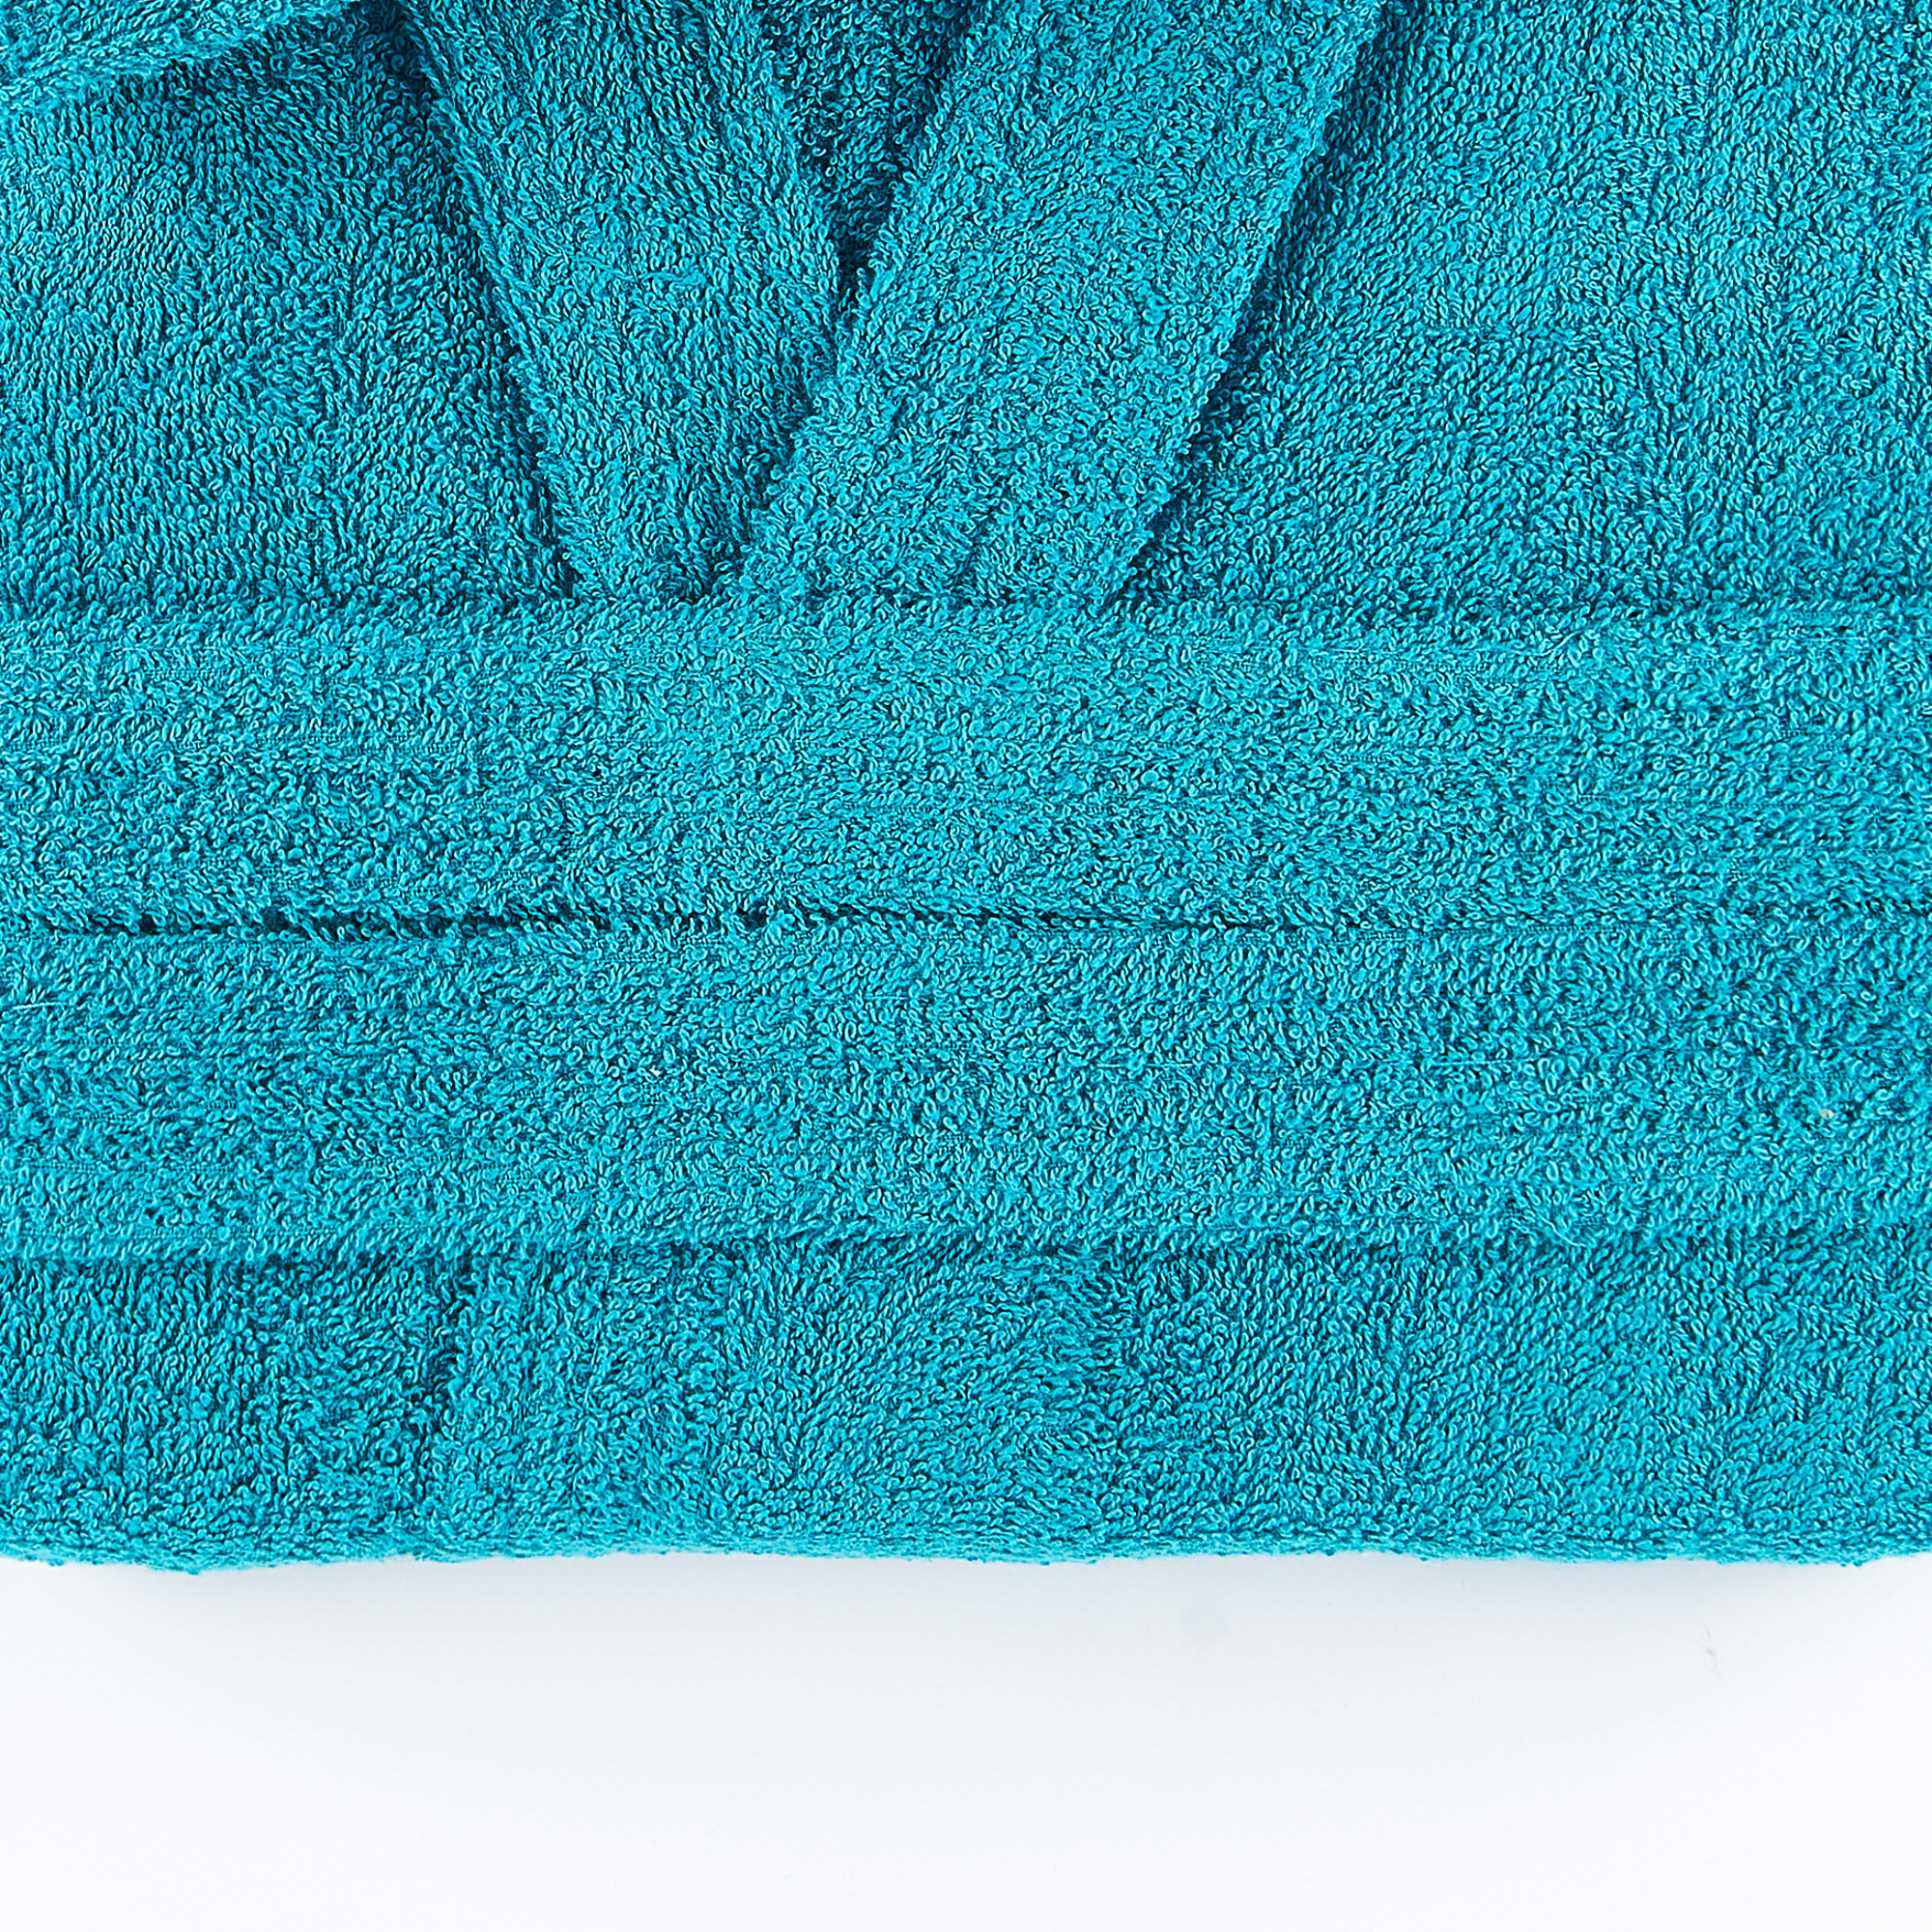 Банный халат с капюшоном и полотенцем Ambient azzurro Maè